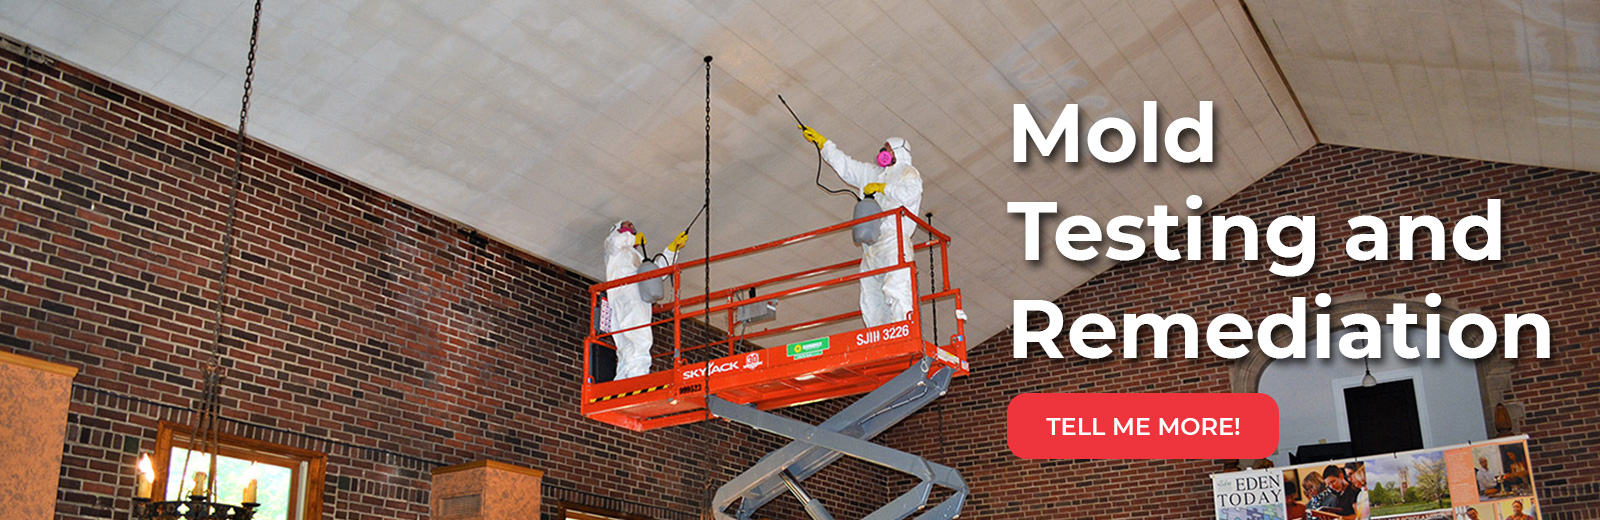 mold testing & remediation banner image